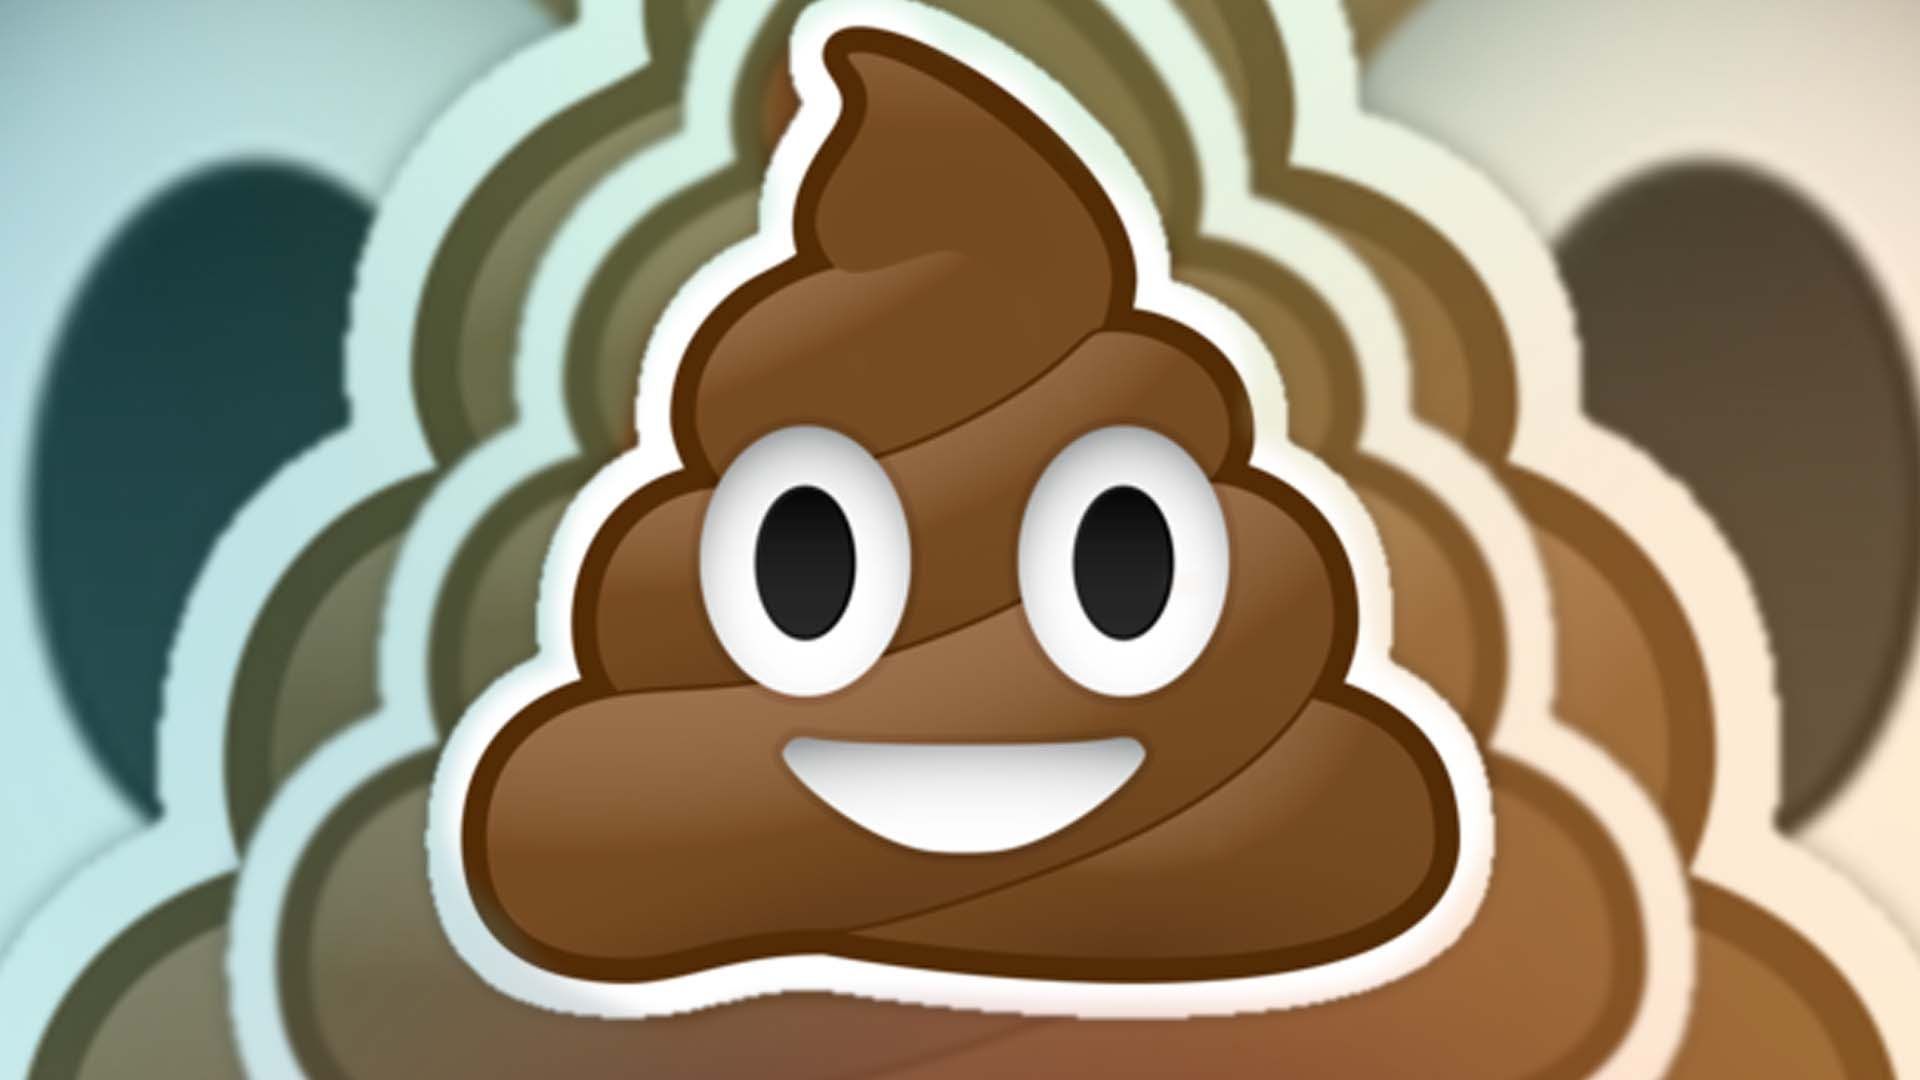 Cool Poop Emoji wallpaper by Shanimation515  Download on ZEDGE  060d